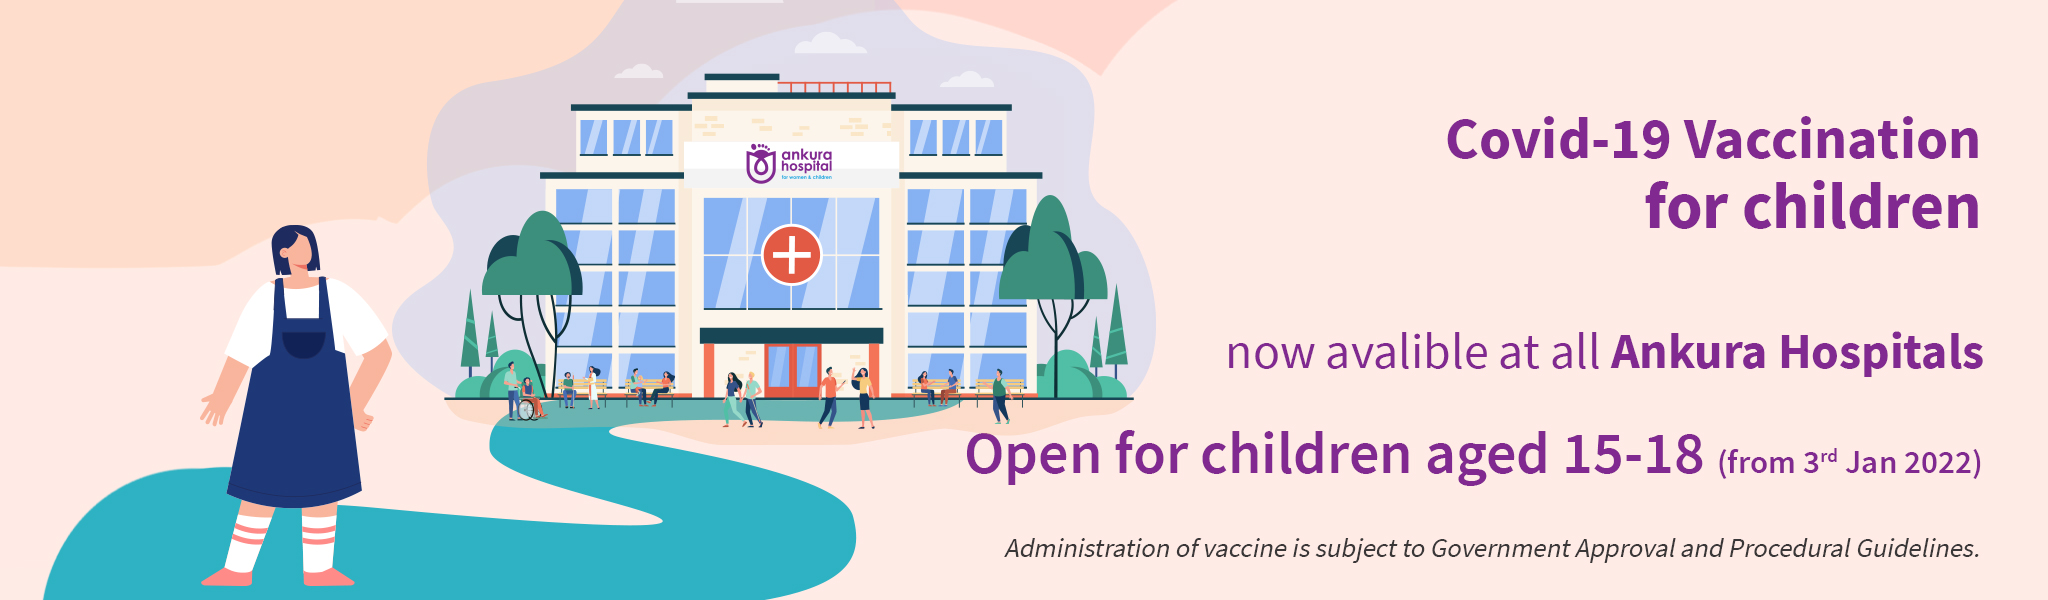 Covid-19-Vaccination-for-your-children Ankura Hospital